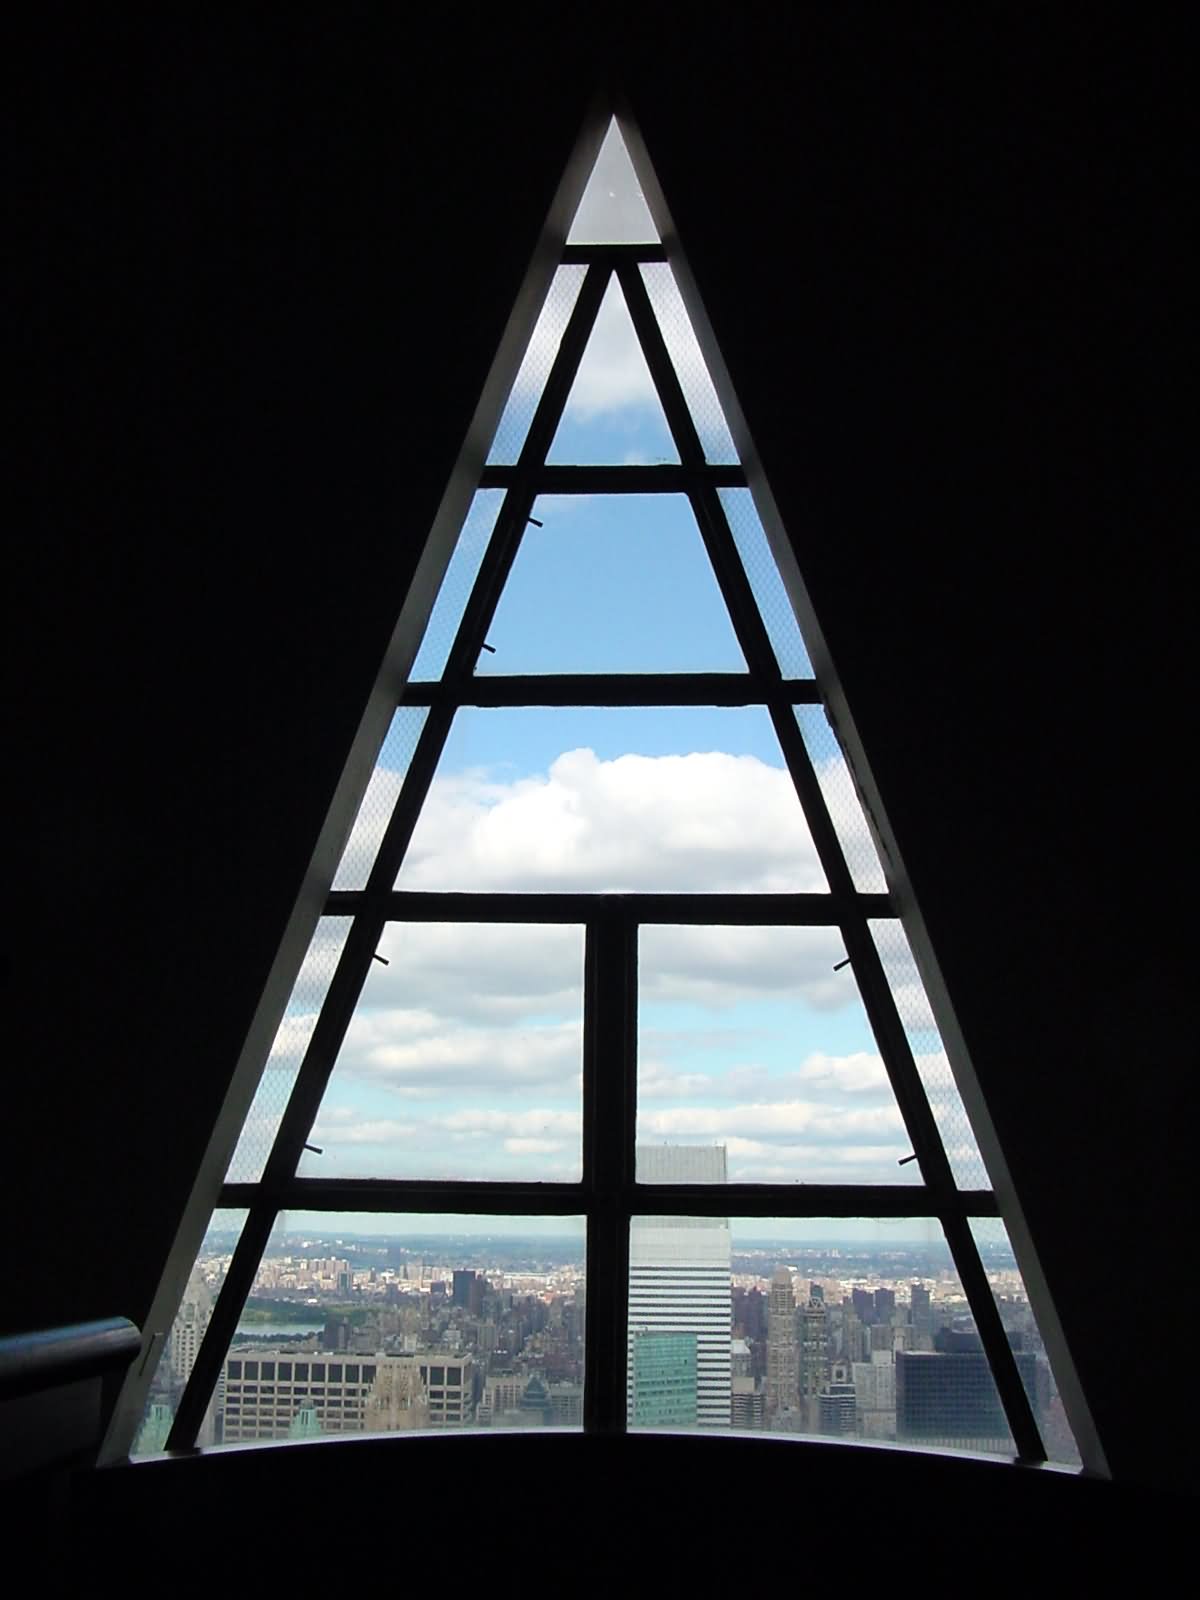 North Facing Window Inside Chrysler Building